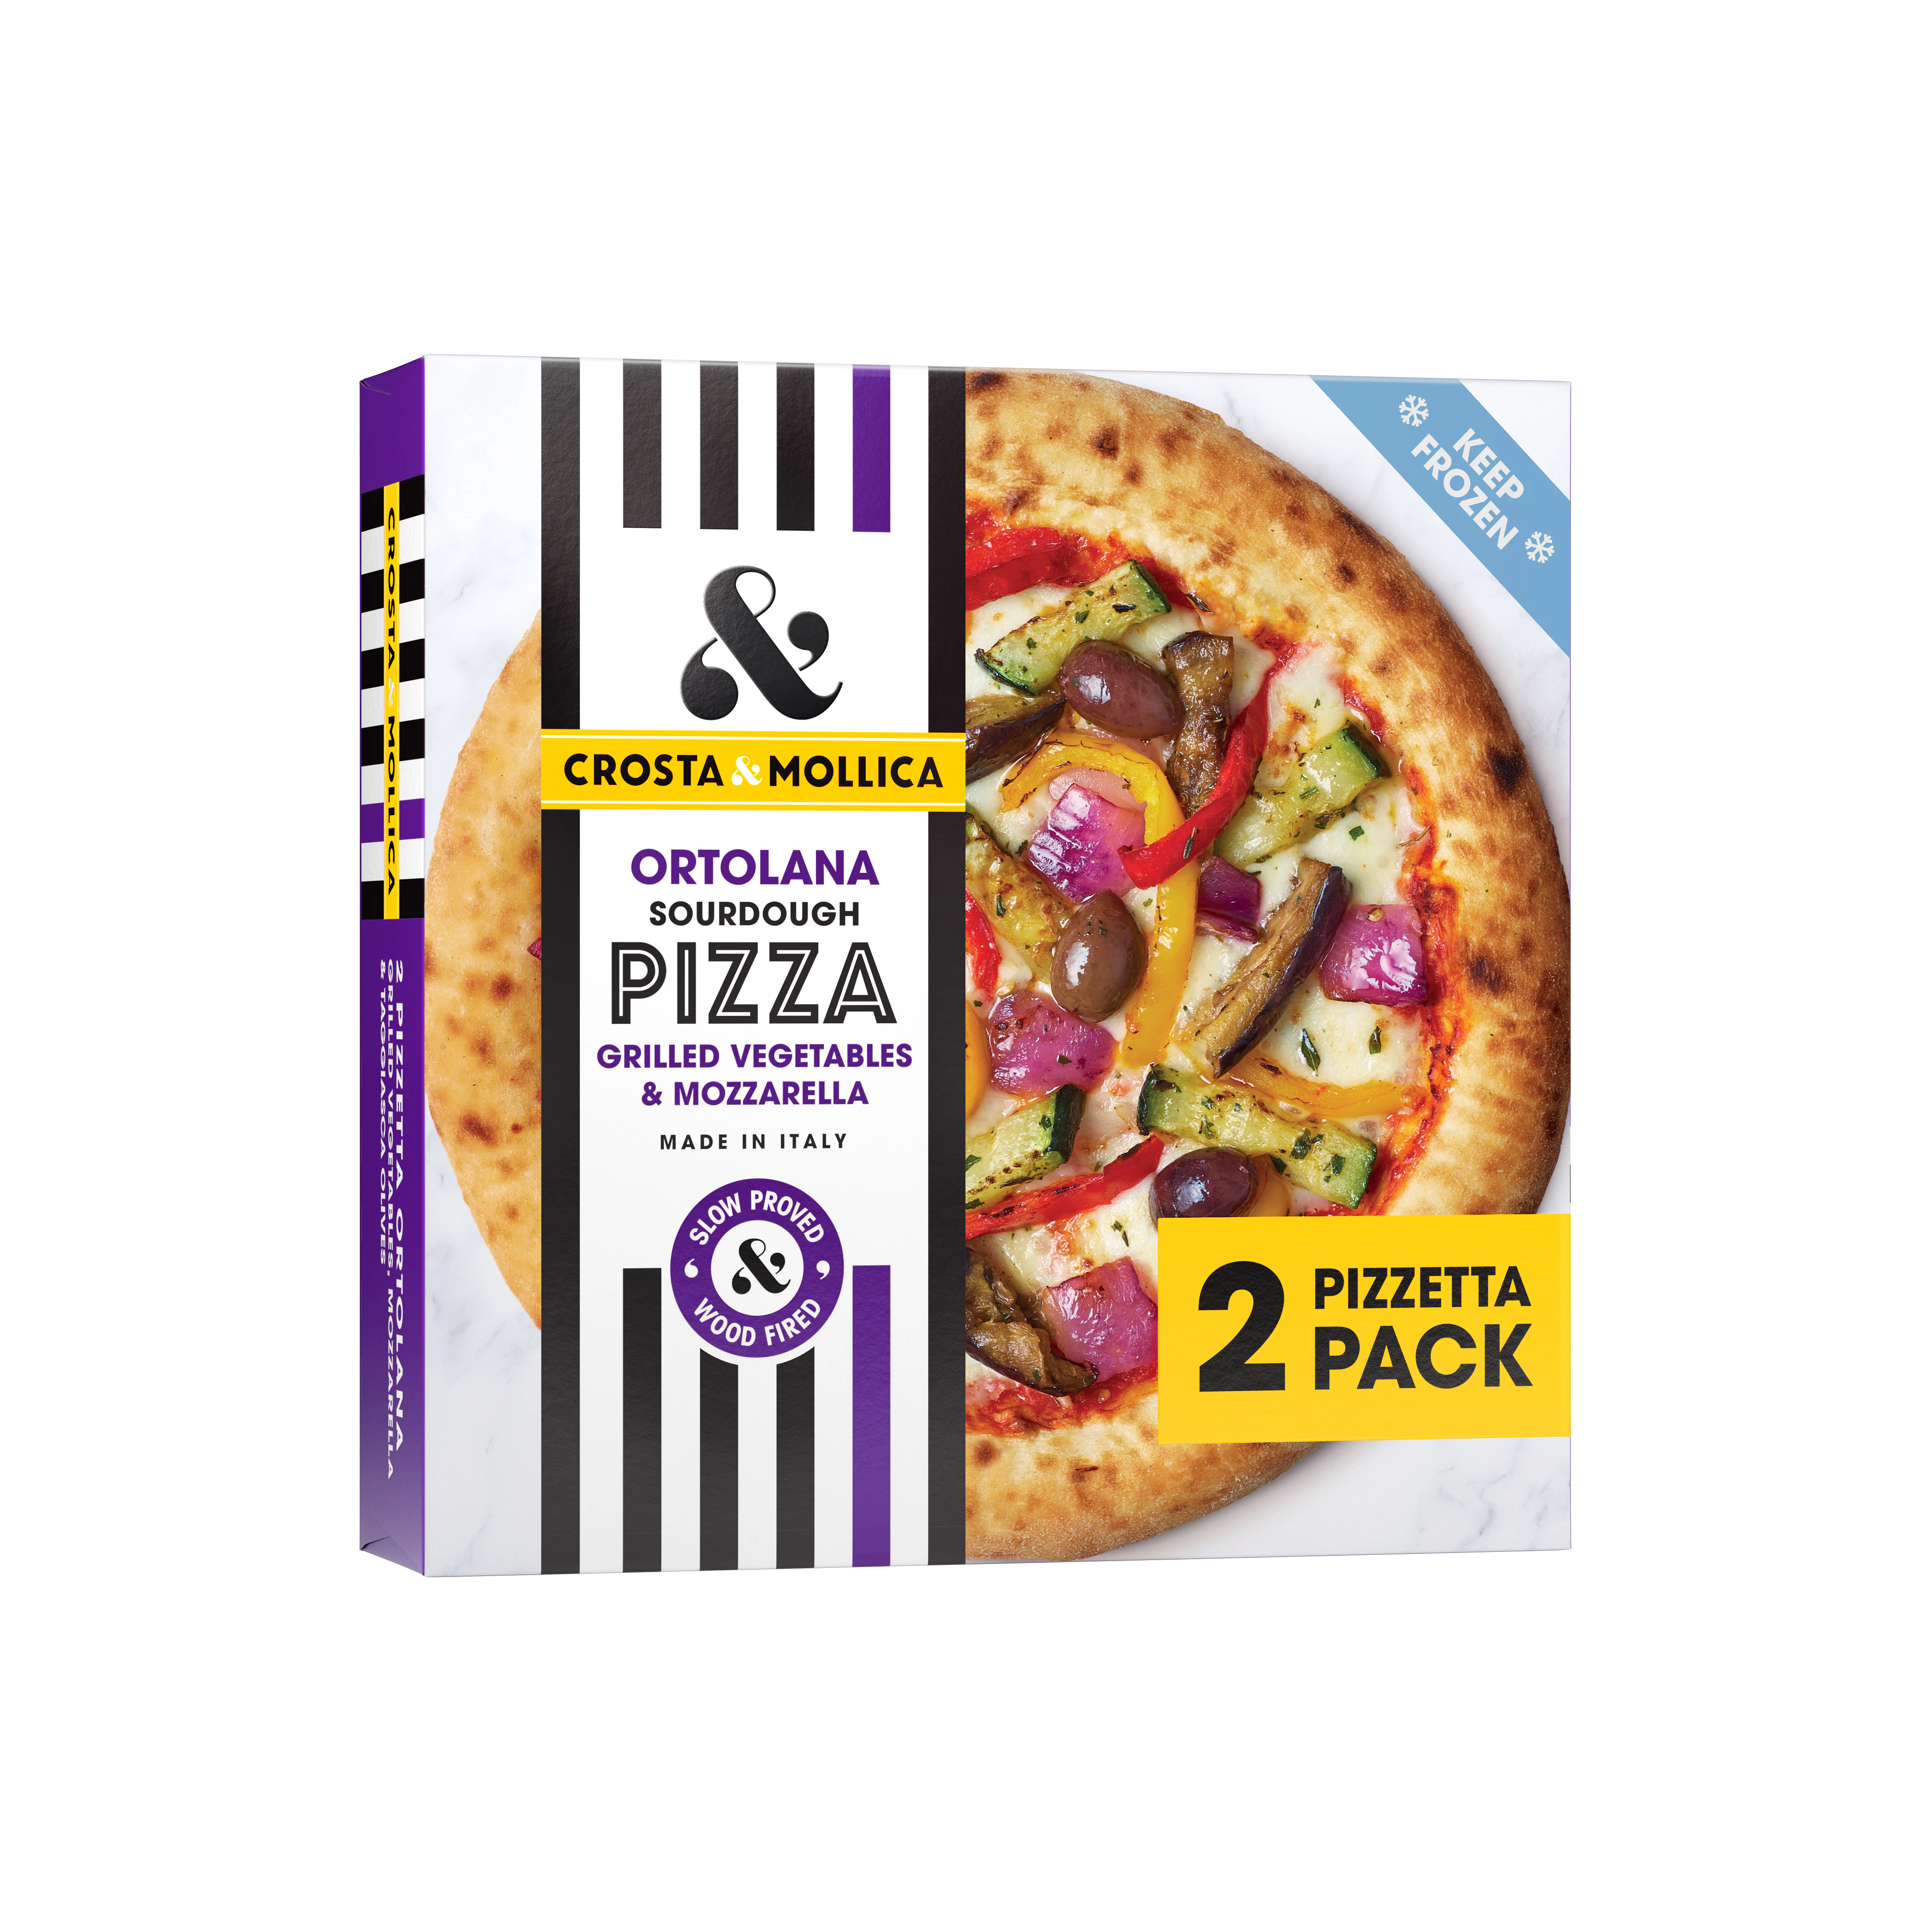 Ortolana Pizzetta packaging.